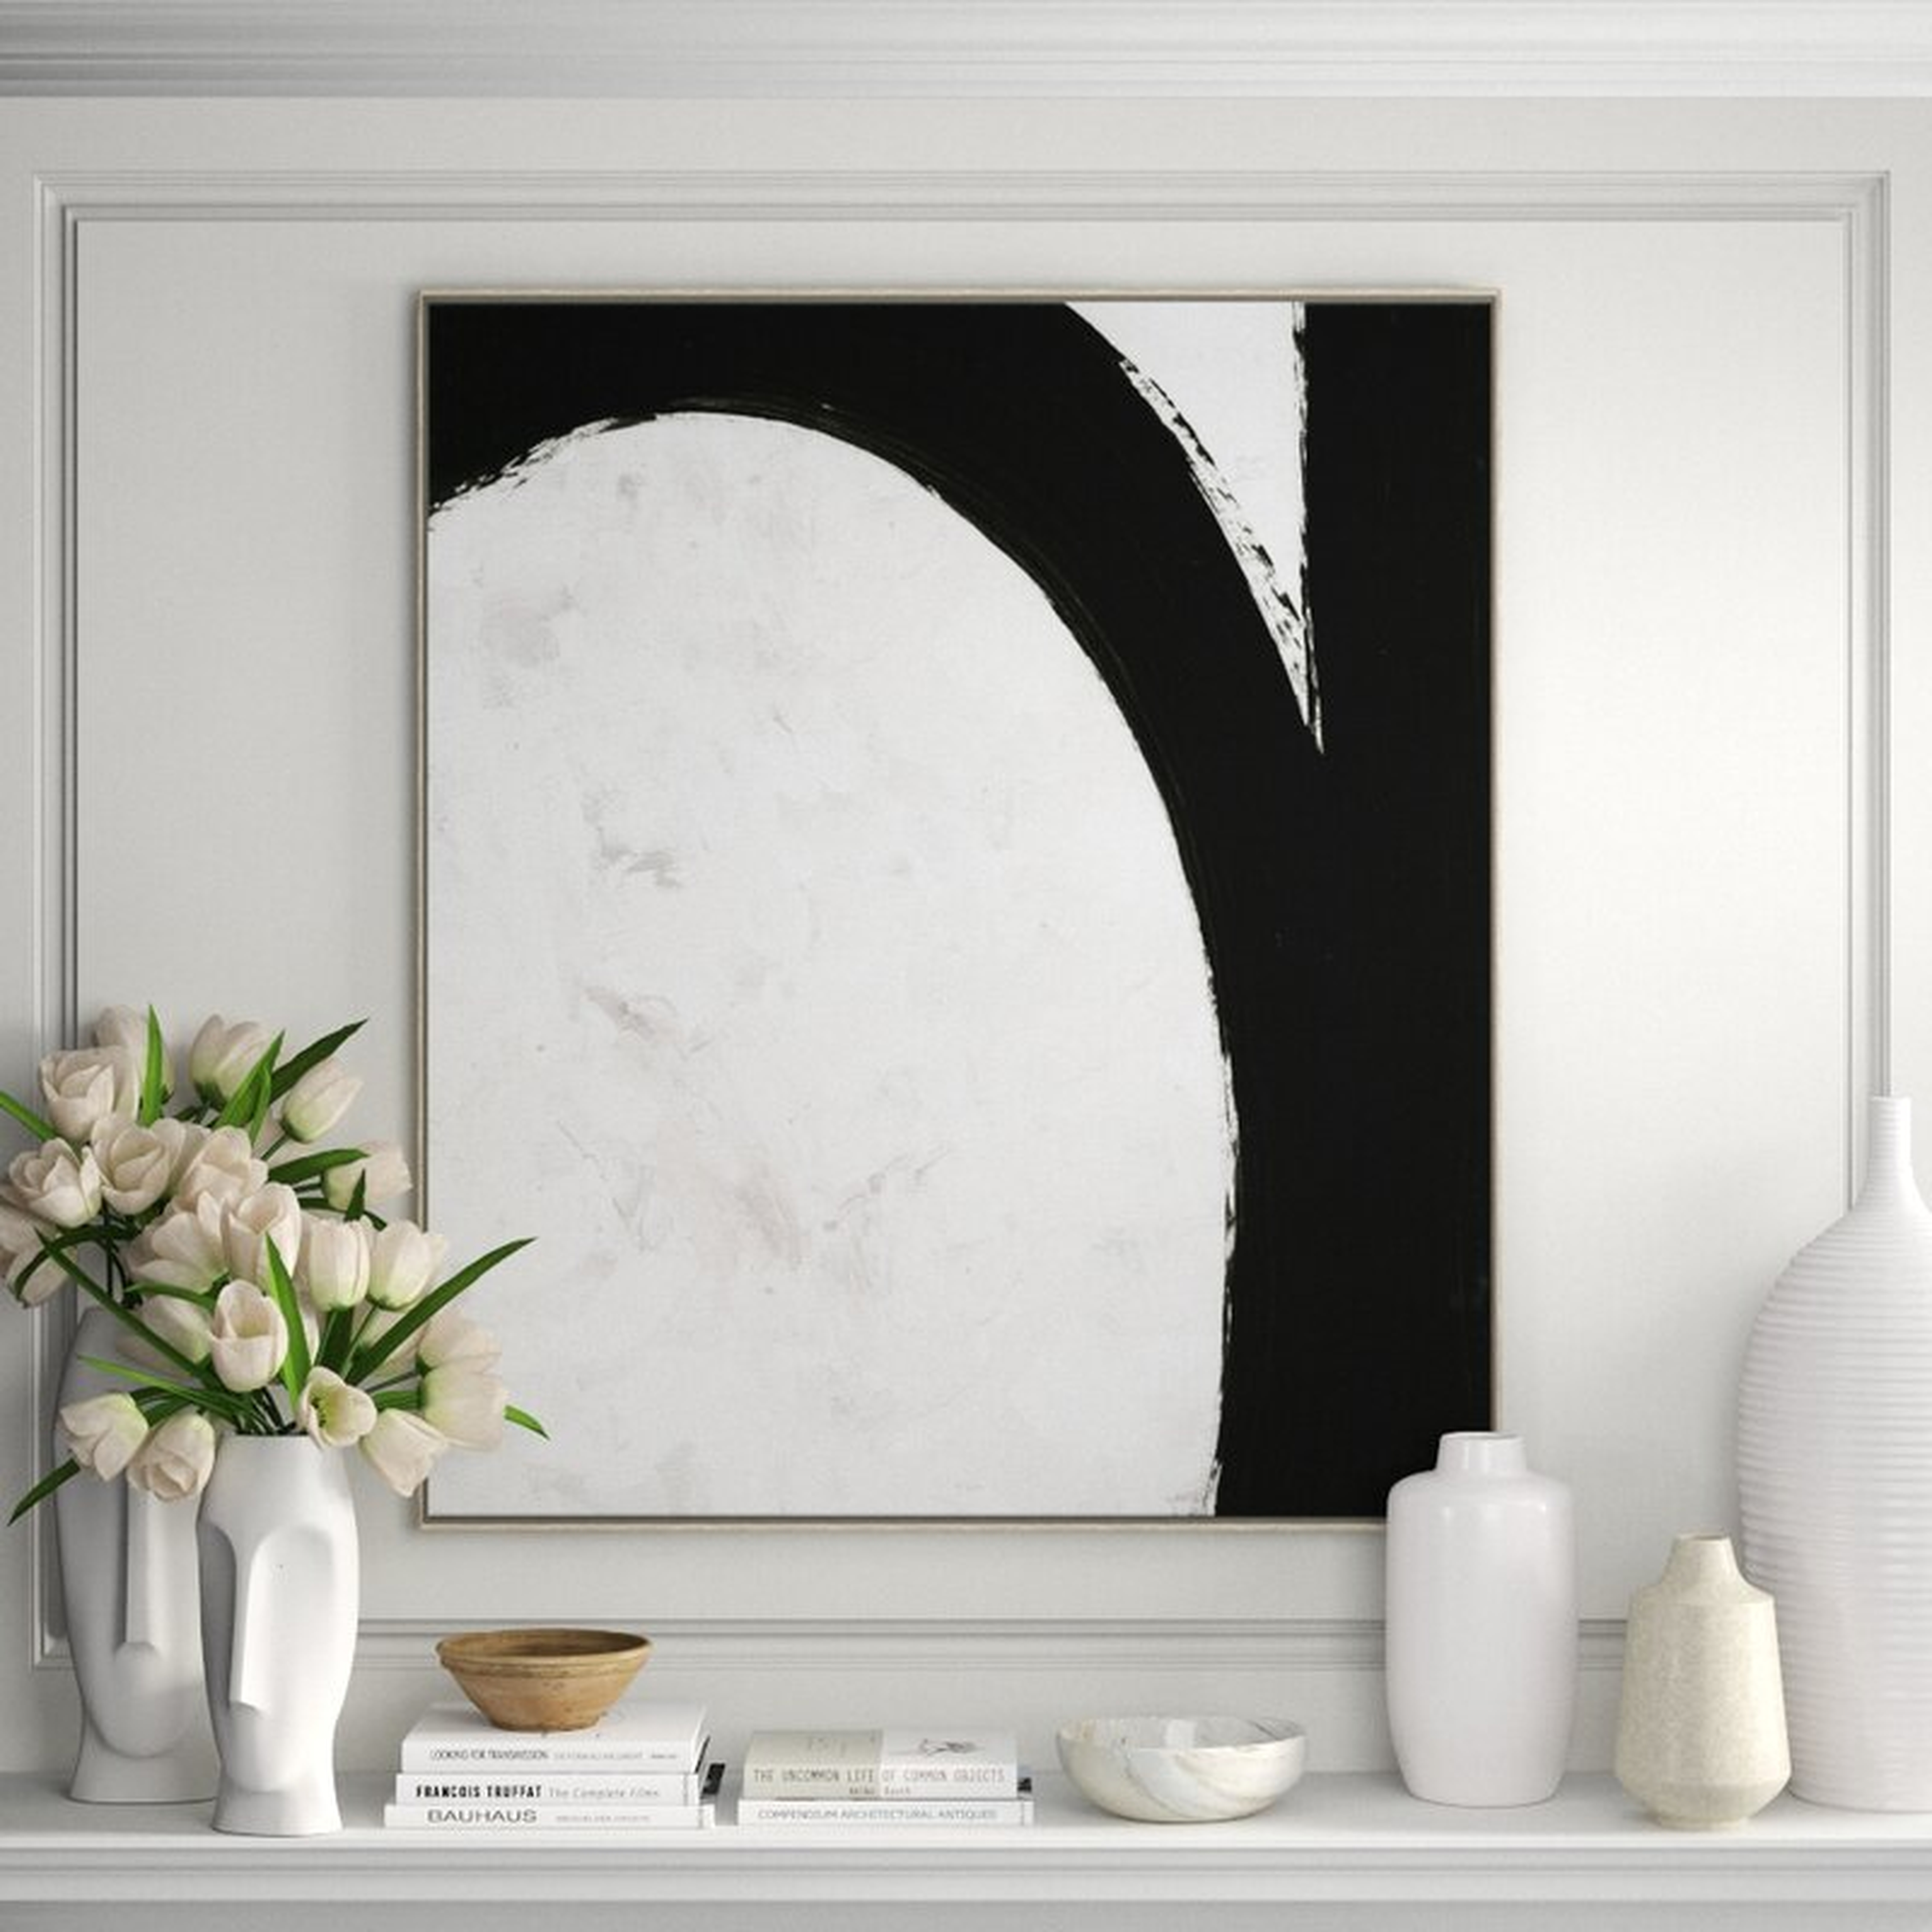 Tobi Fairley 'Black and White Circle' - Picture Frame Print on Paper - Perigold